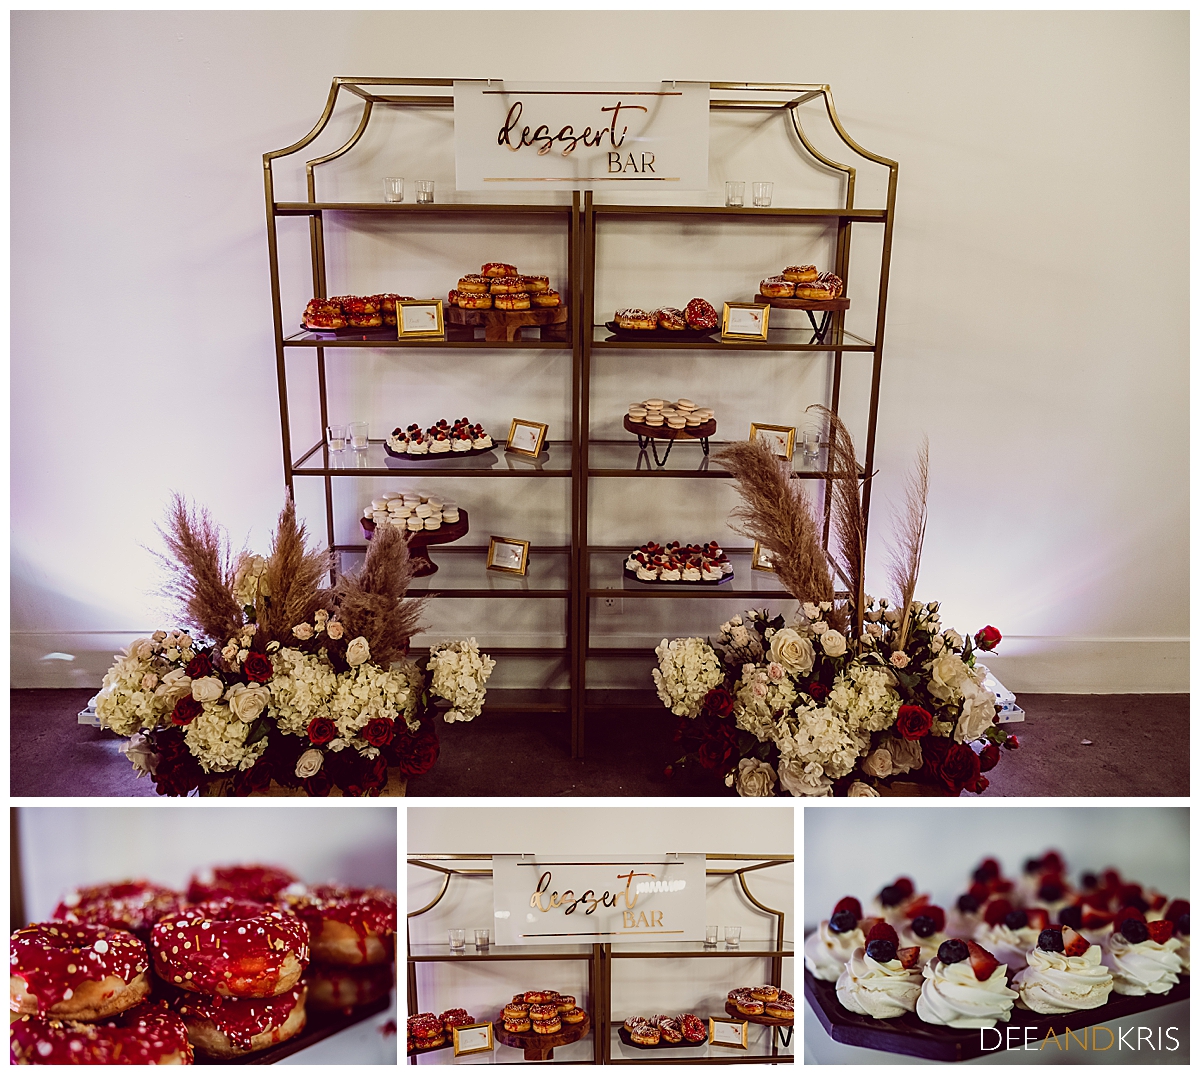 Four images of various desserts on dessert bar cart.